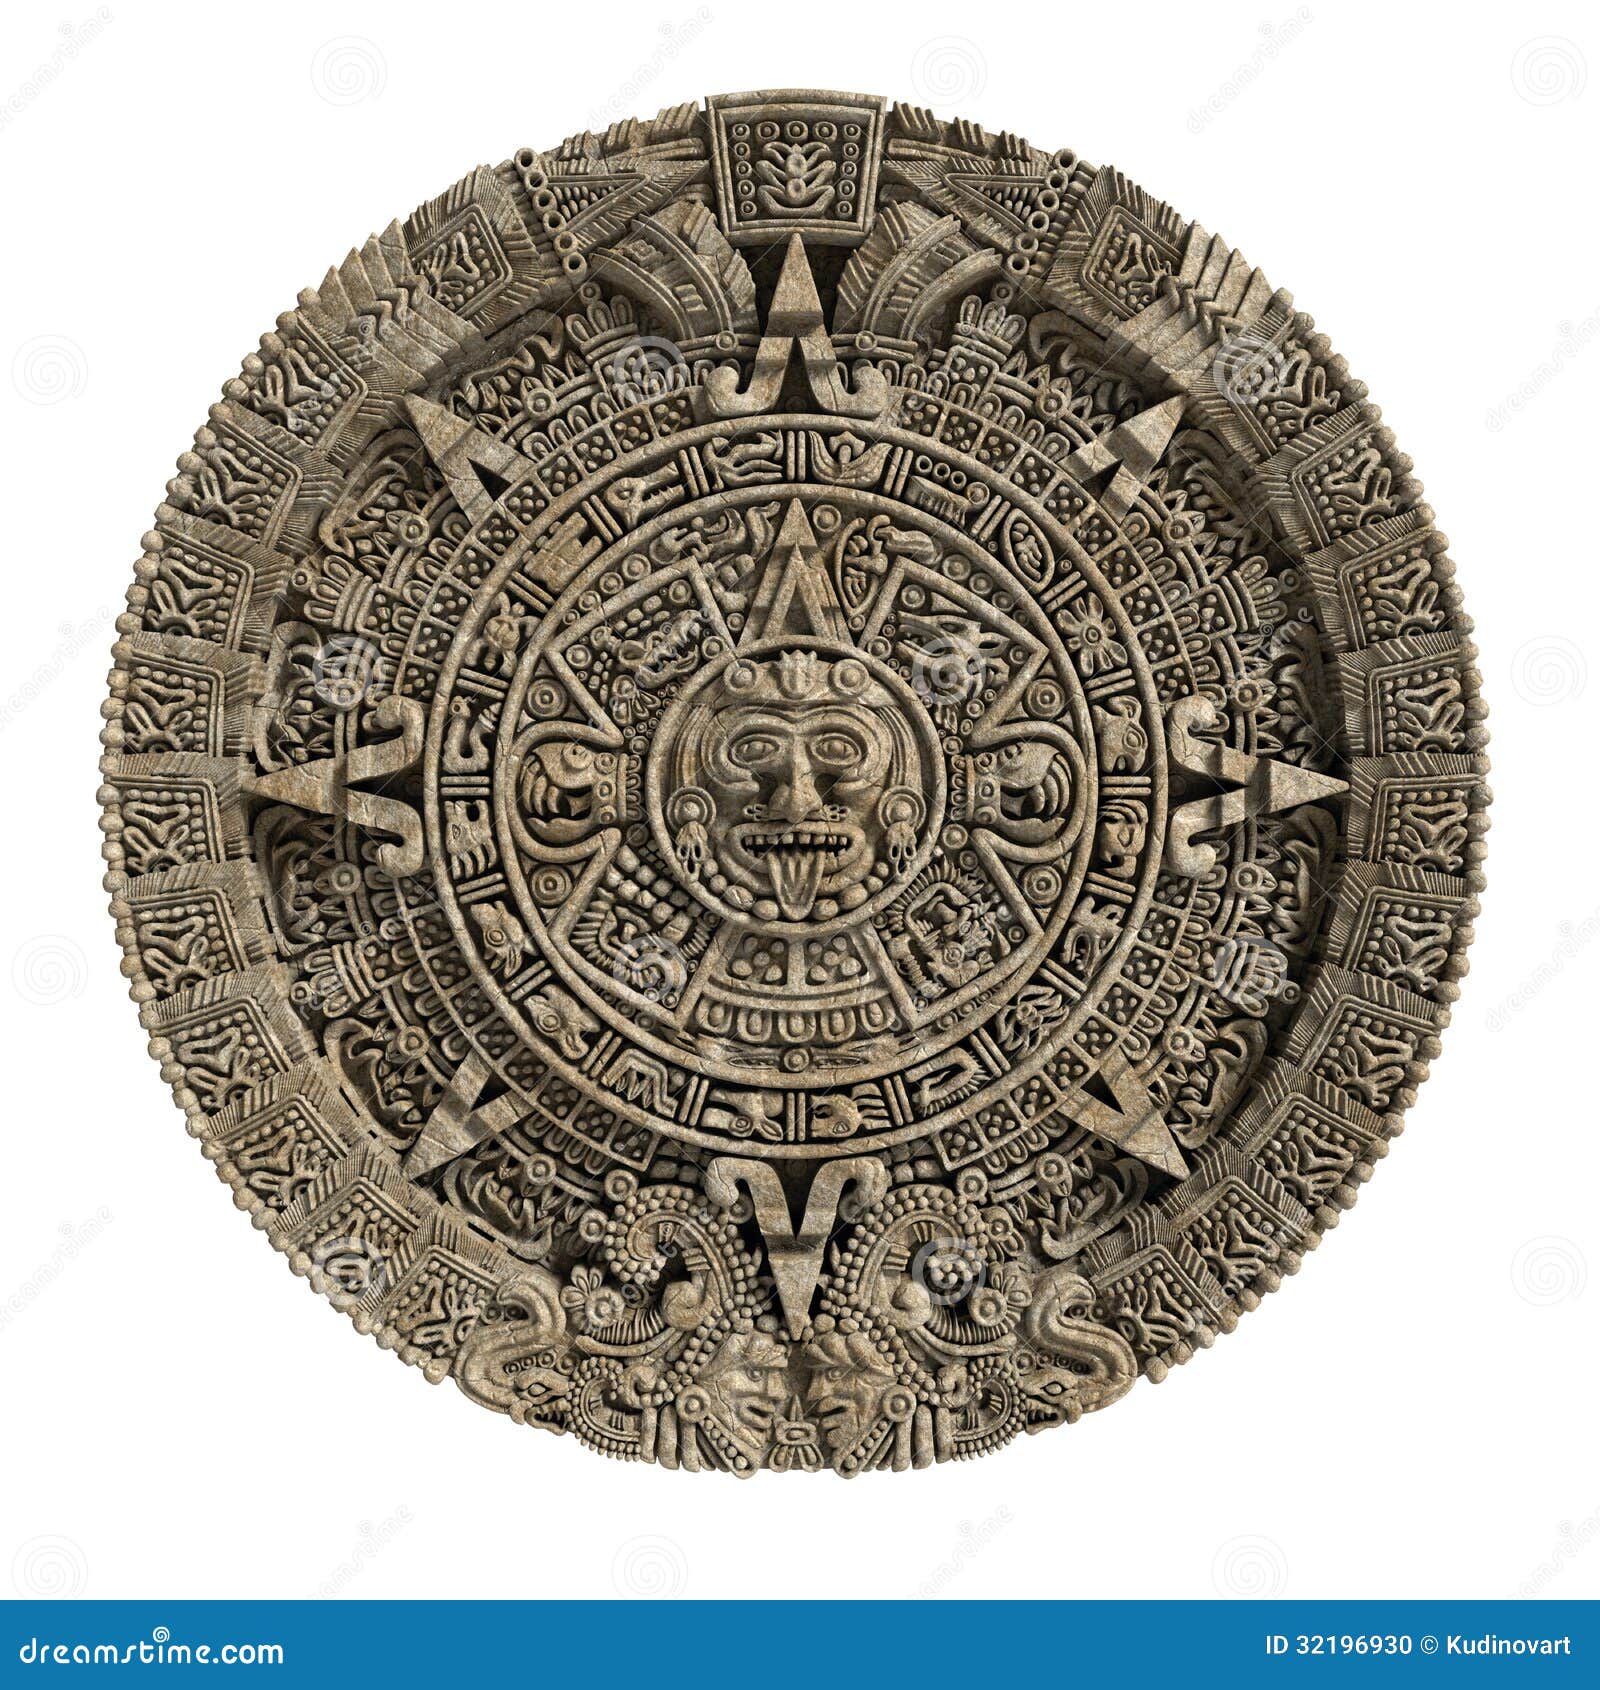 the mayan calendar